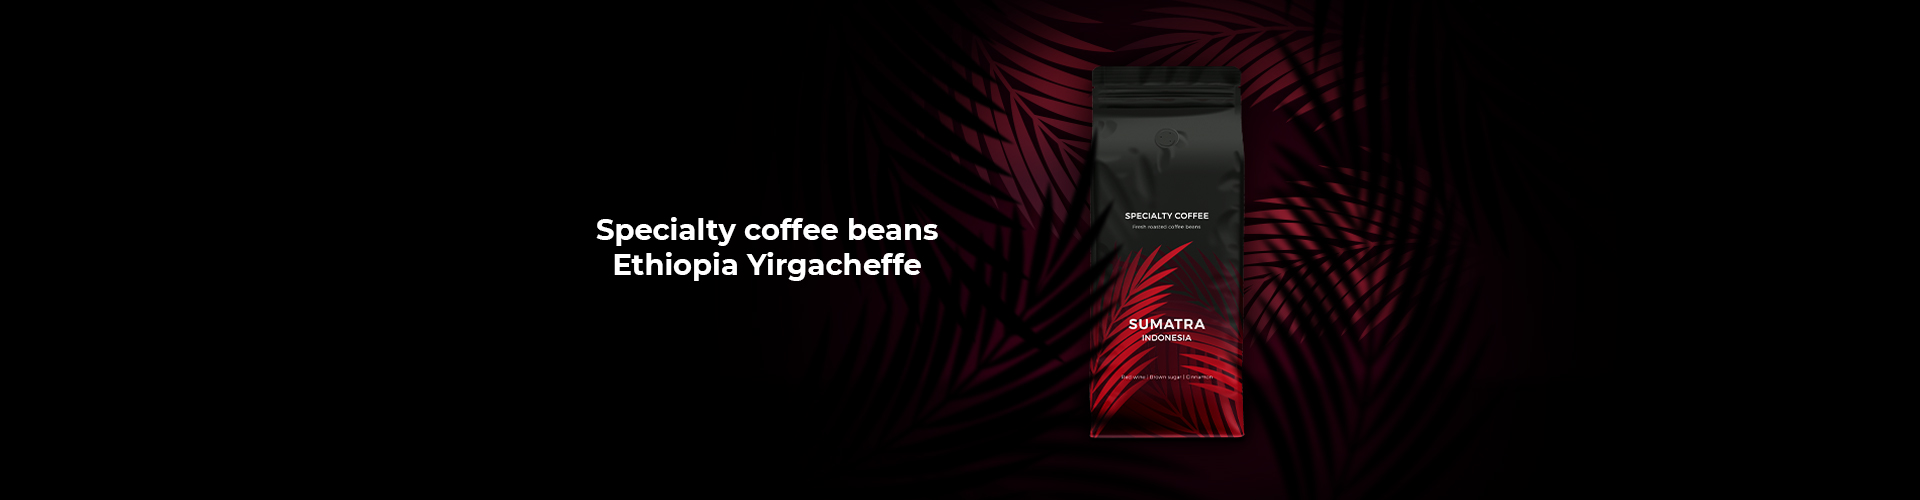 Specialty coffee beans Indonesia Sumatra